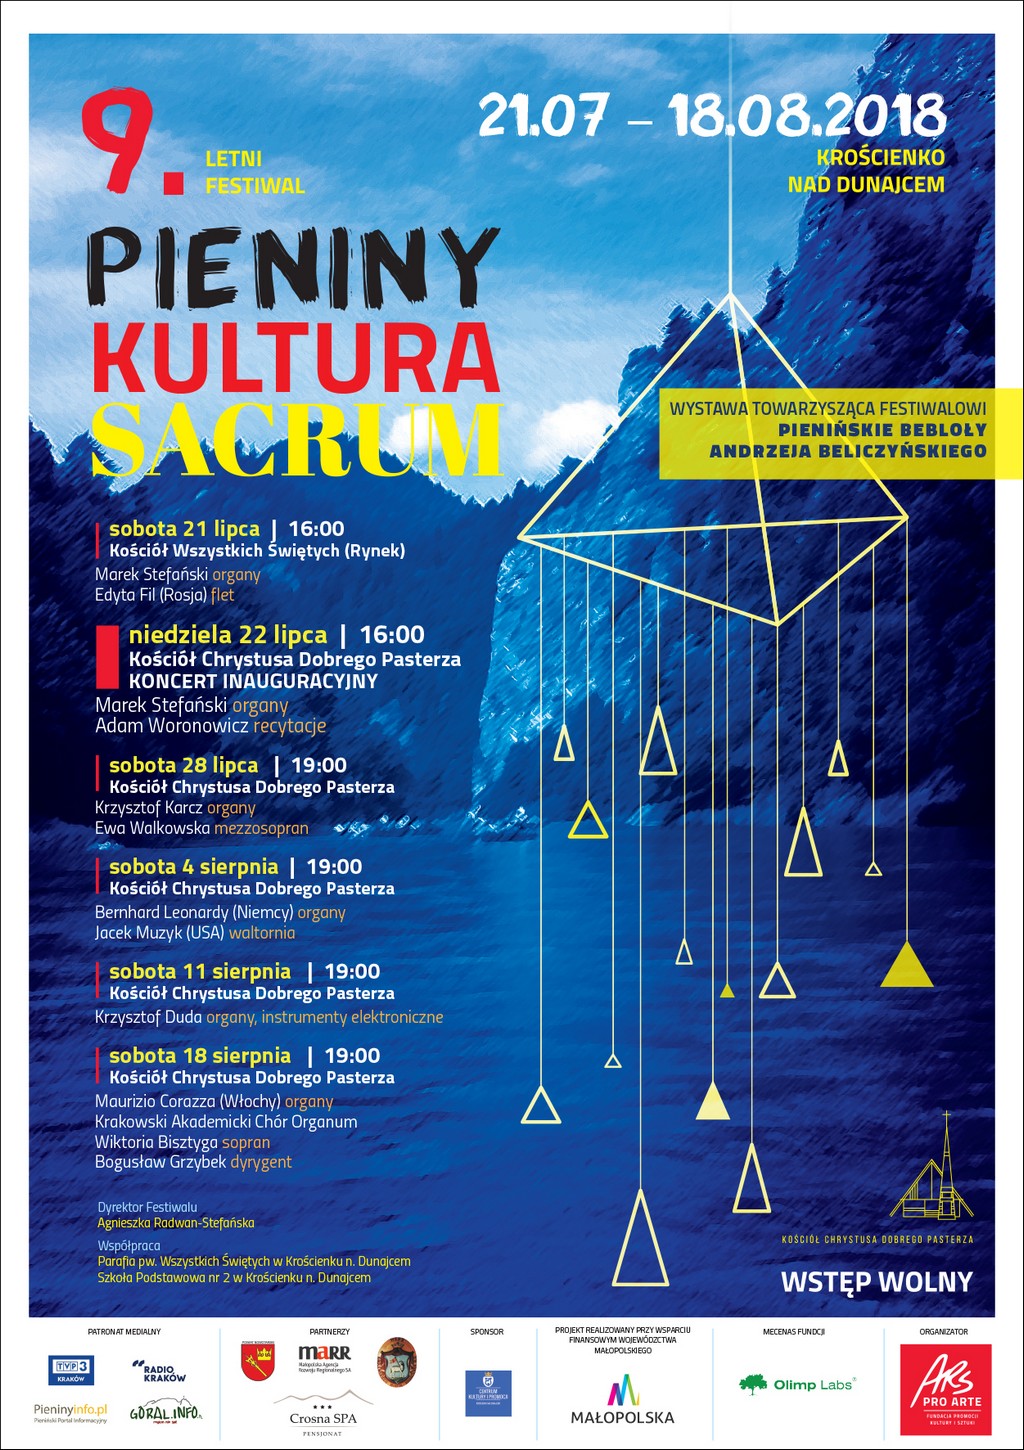 9 Letni Festiwal Pieniny Kultura Sacrum